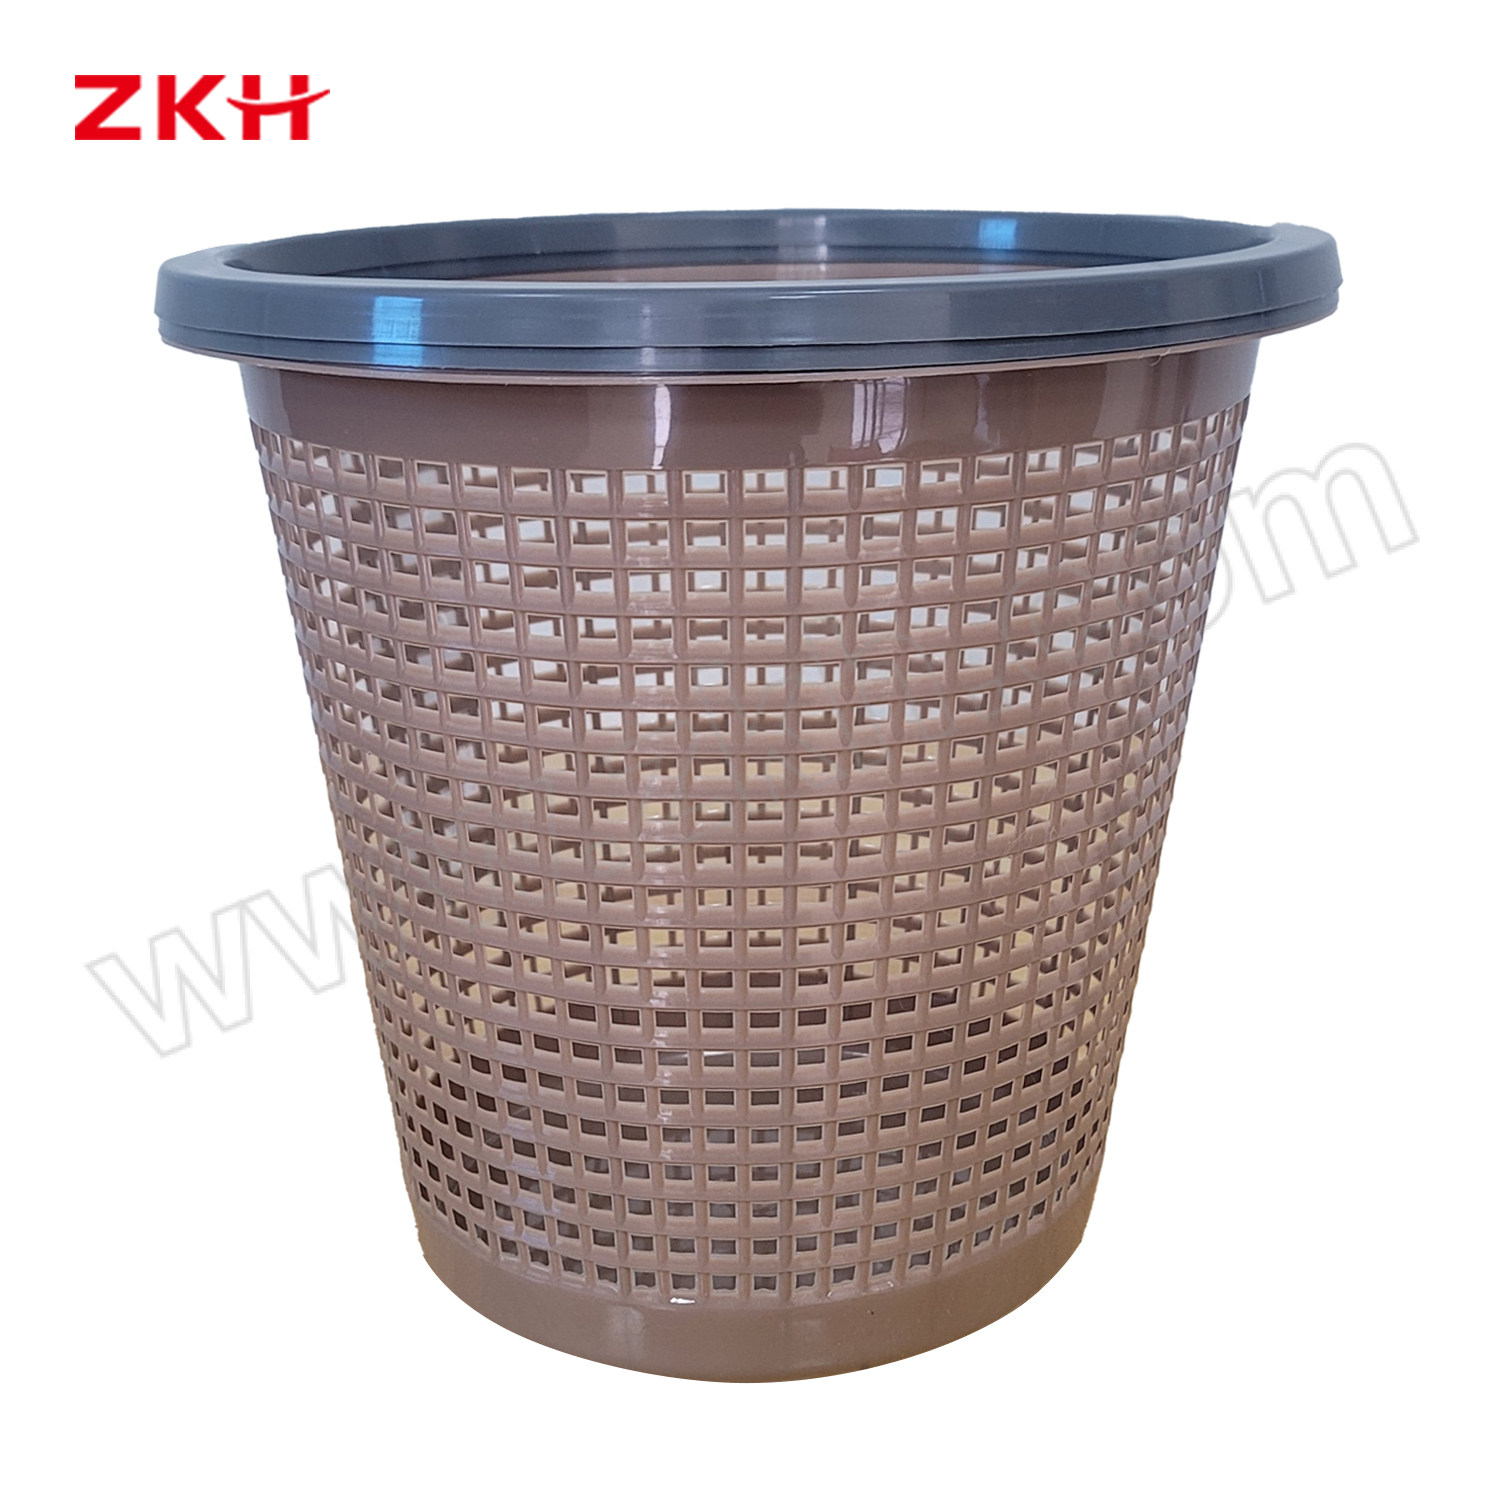 ZKH/震坤行 压圈网格镂空垃圾桶 ZKH-LJT-SLLK10  10L 1个